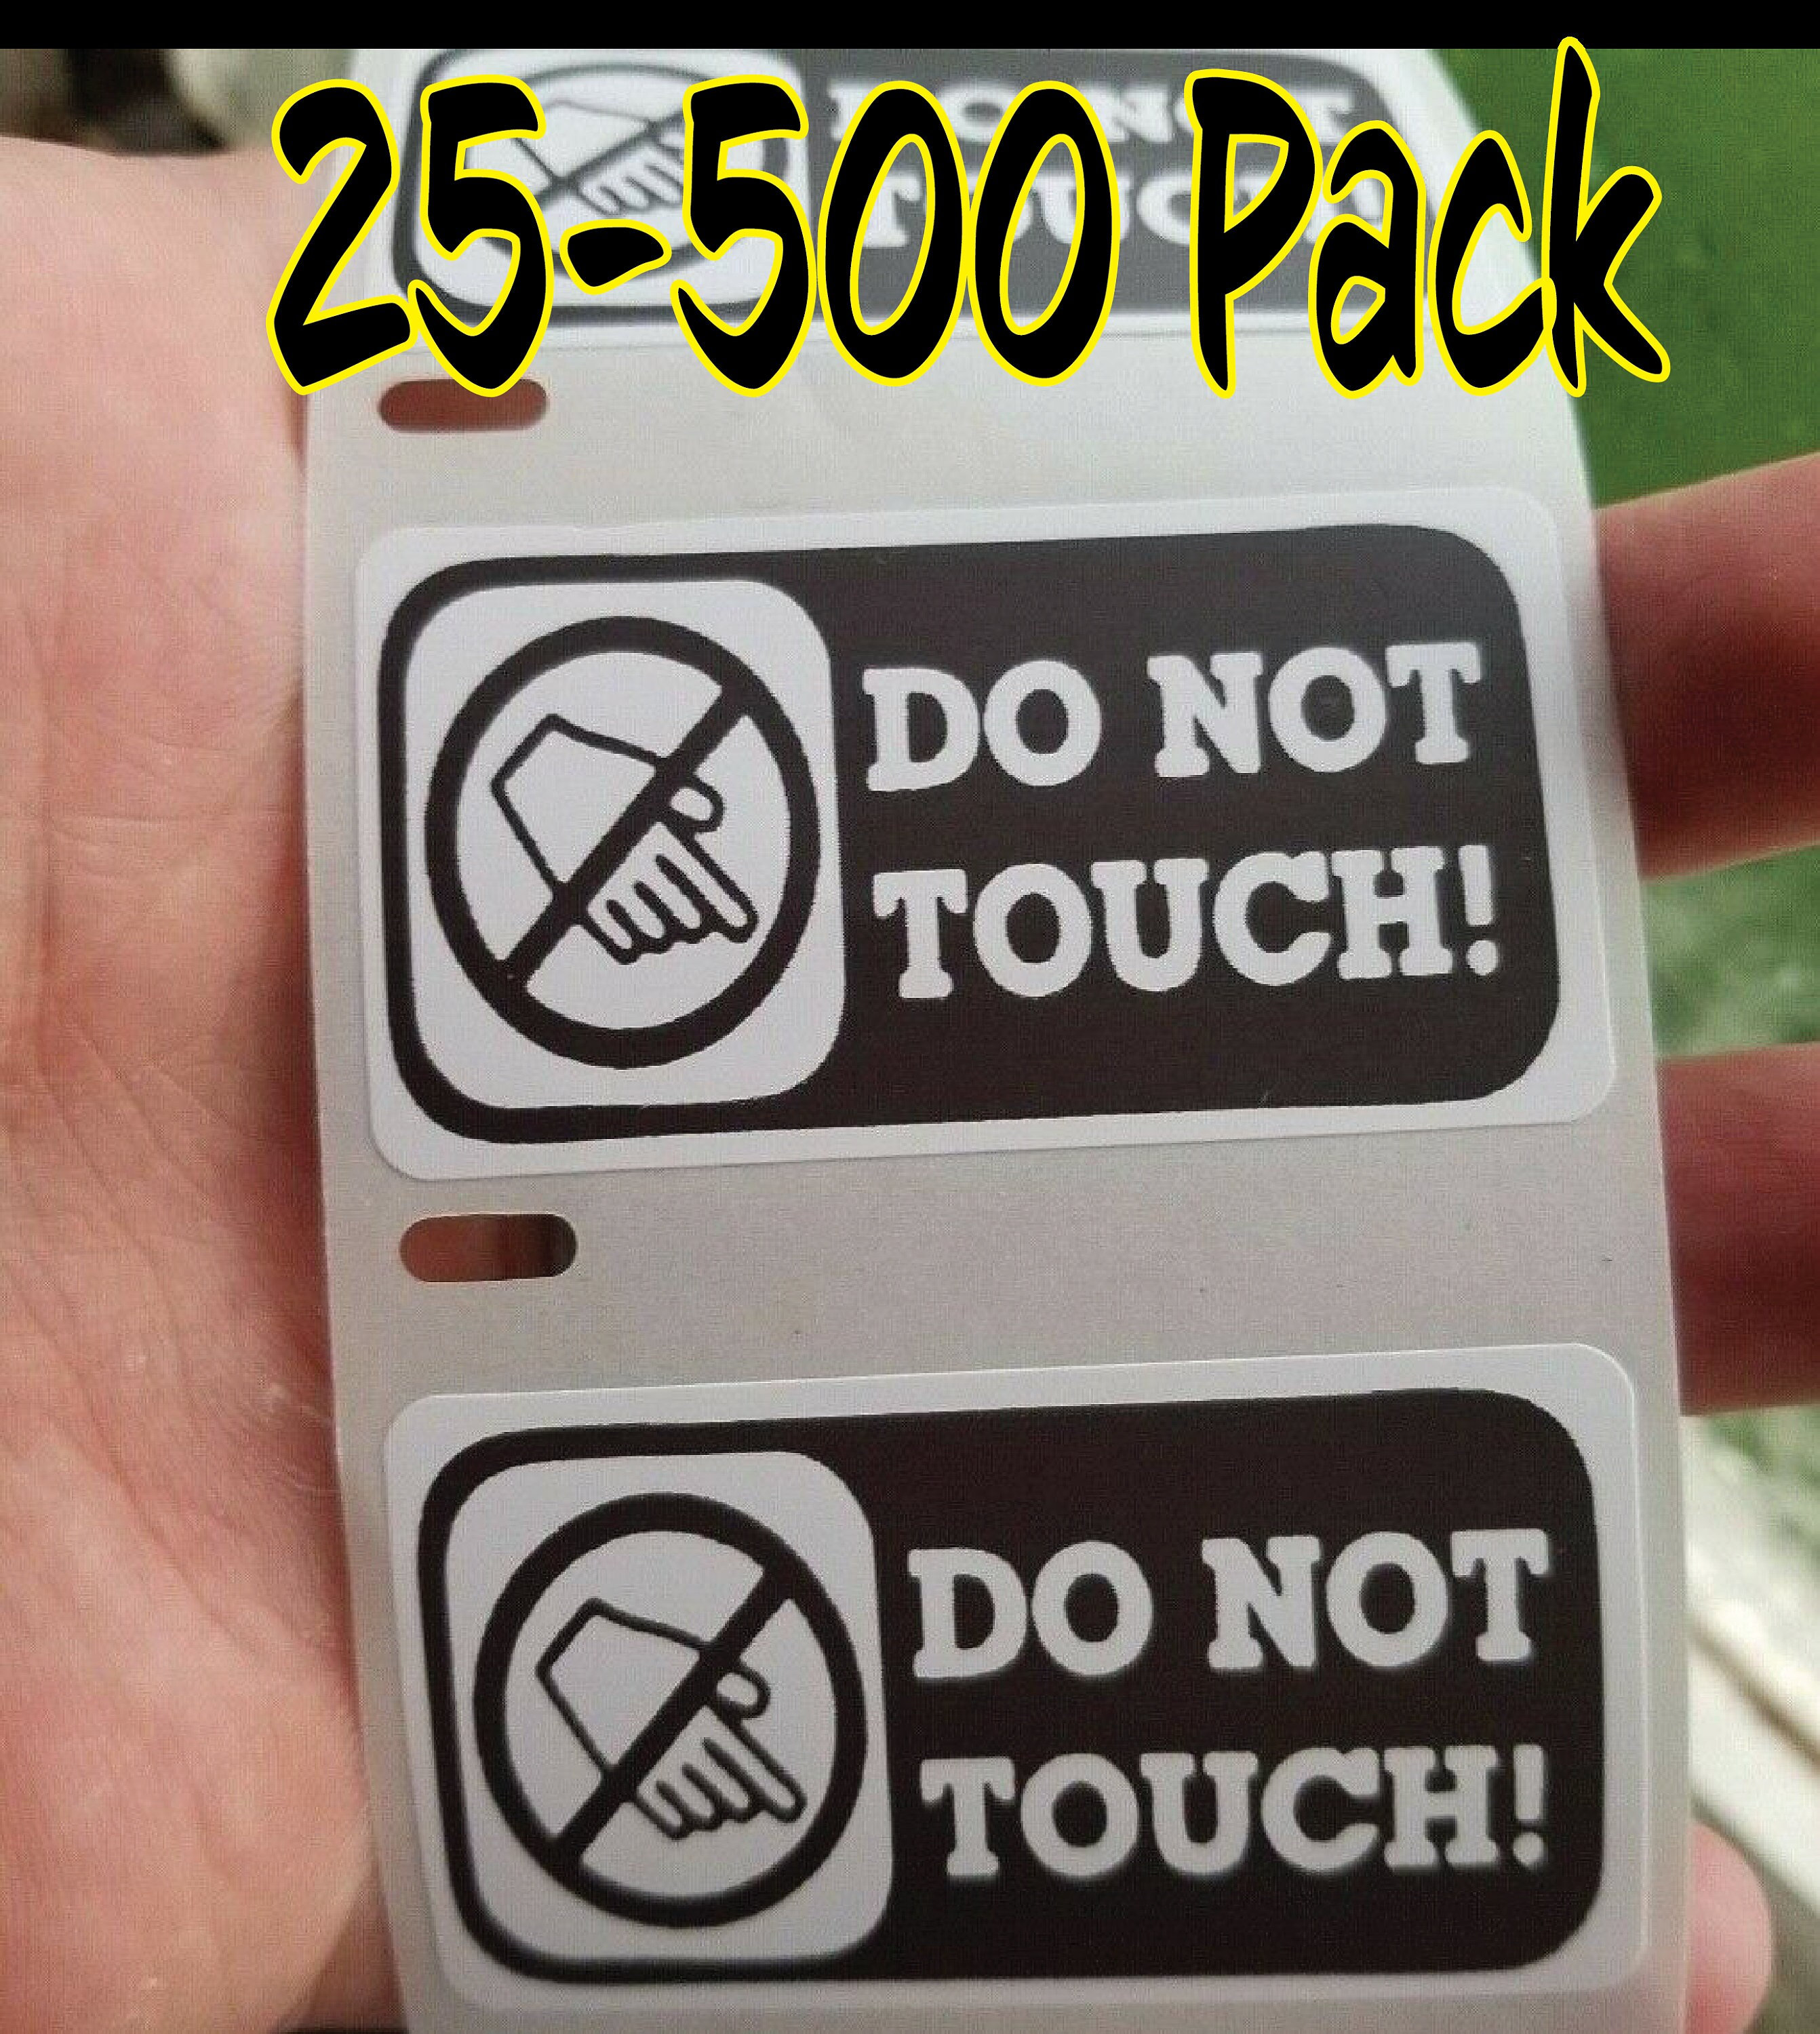 WAT LADY 25-1000 Pack Meme Sticker Decal Funny Gag Prank Stickers Internet  Joke Hard Hat Bulk Lot 